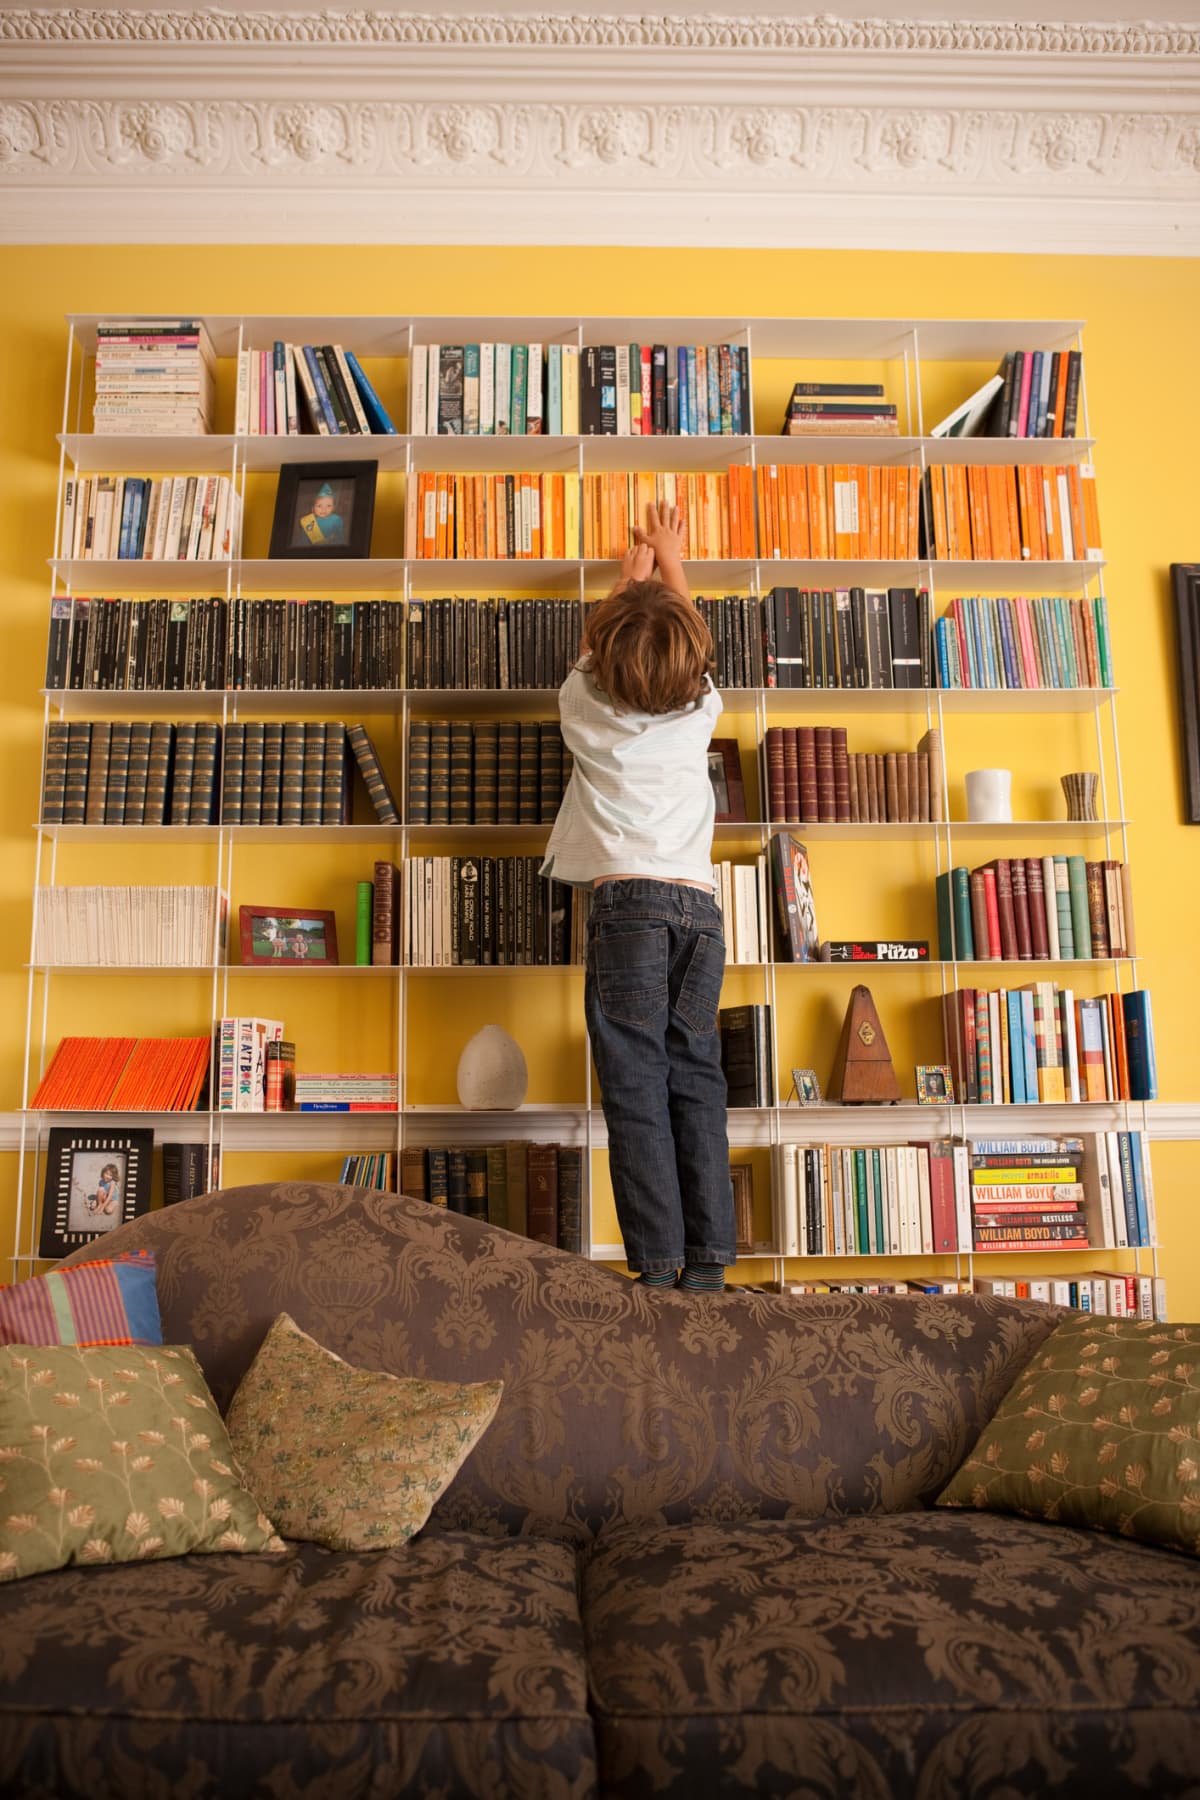 Boy reaching up towards a book on a shelf